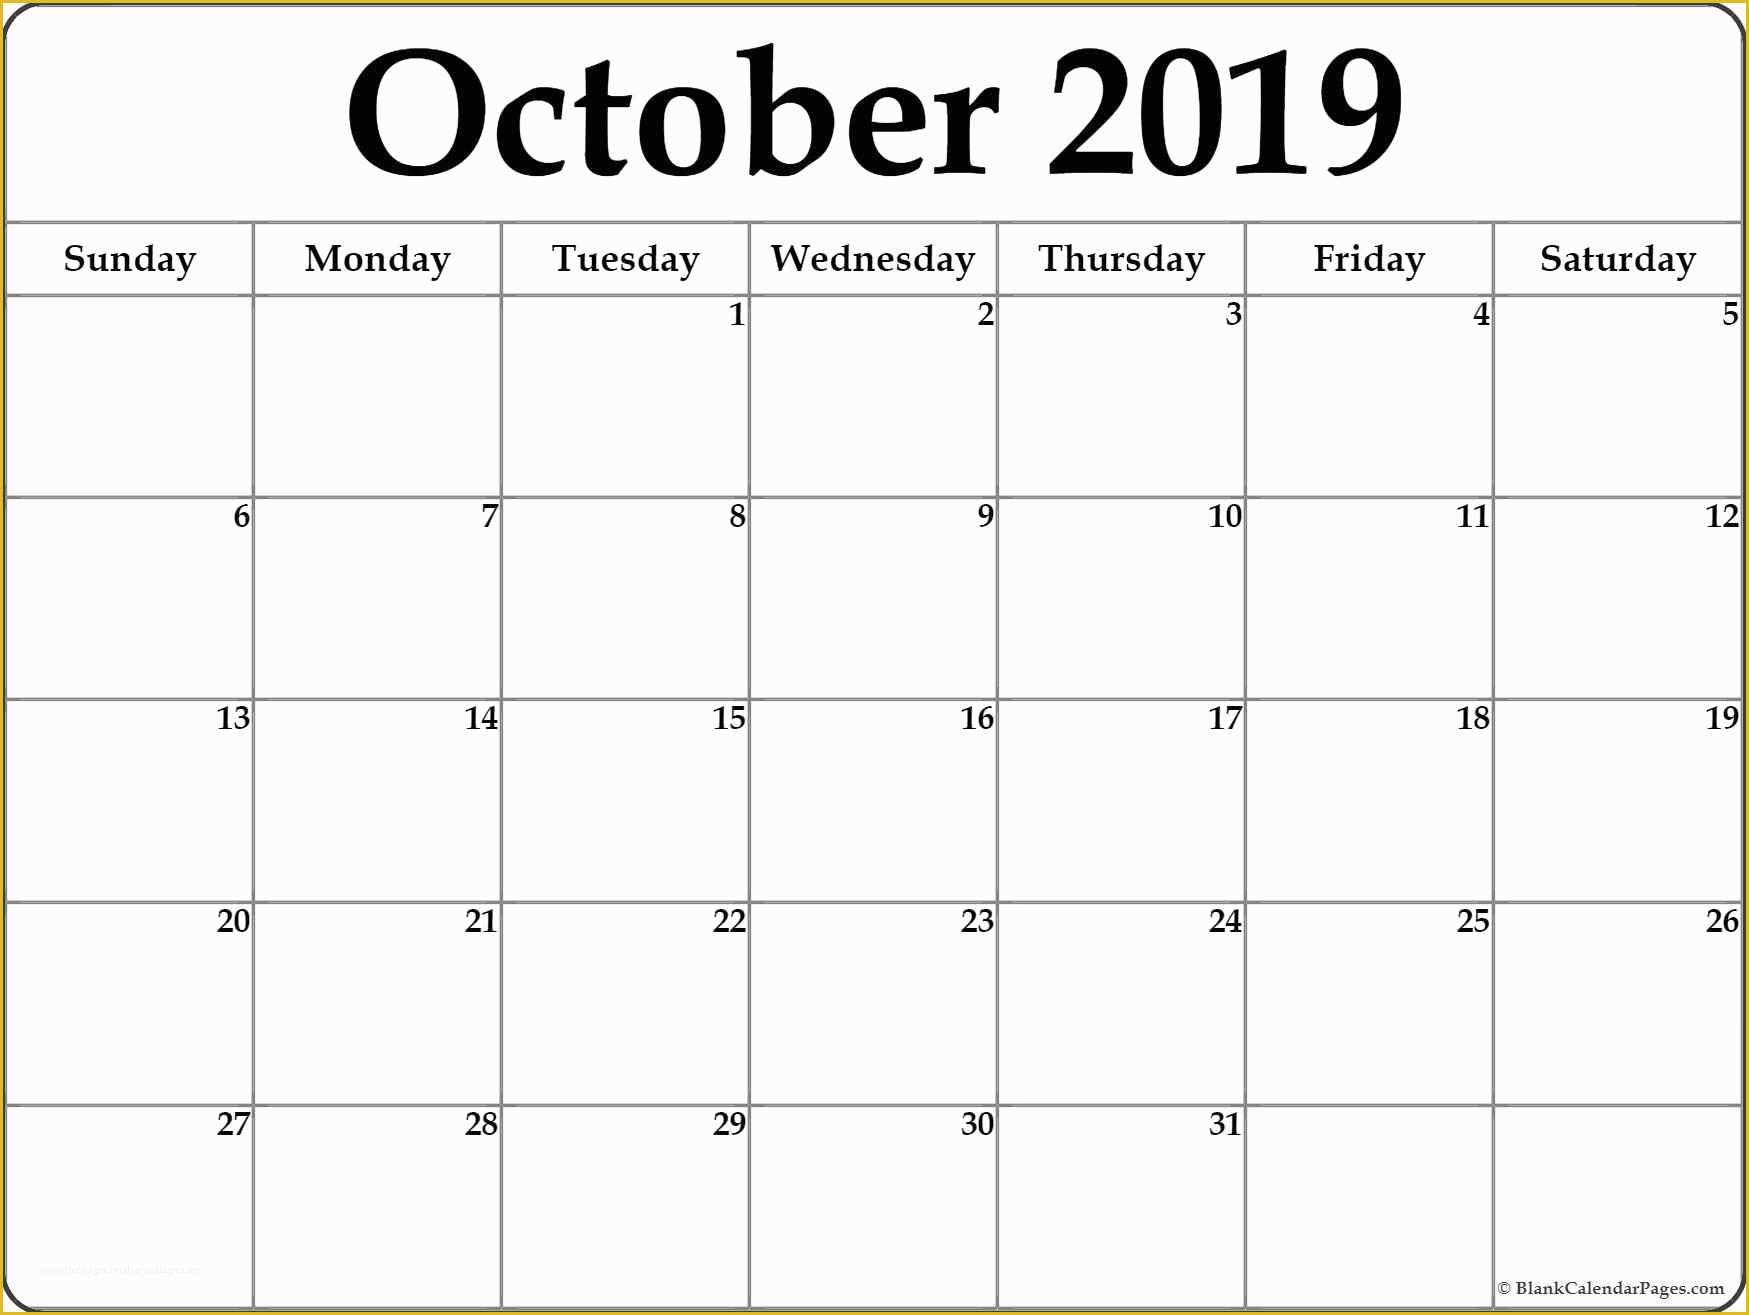 Free Monday Through Friday Calendar Template Of 2019 Calendar Monday Through Friday October